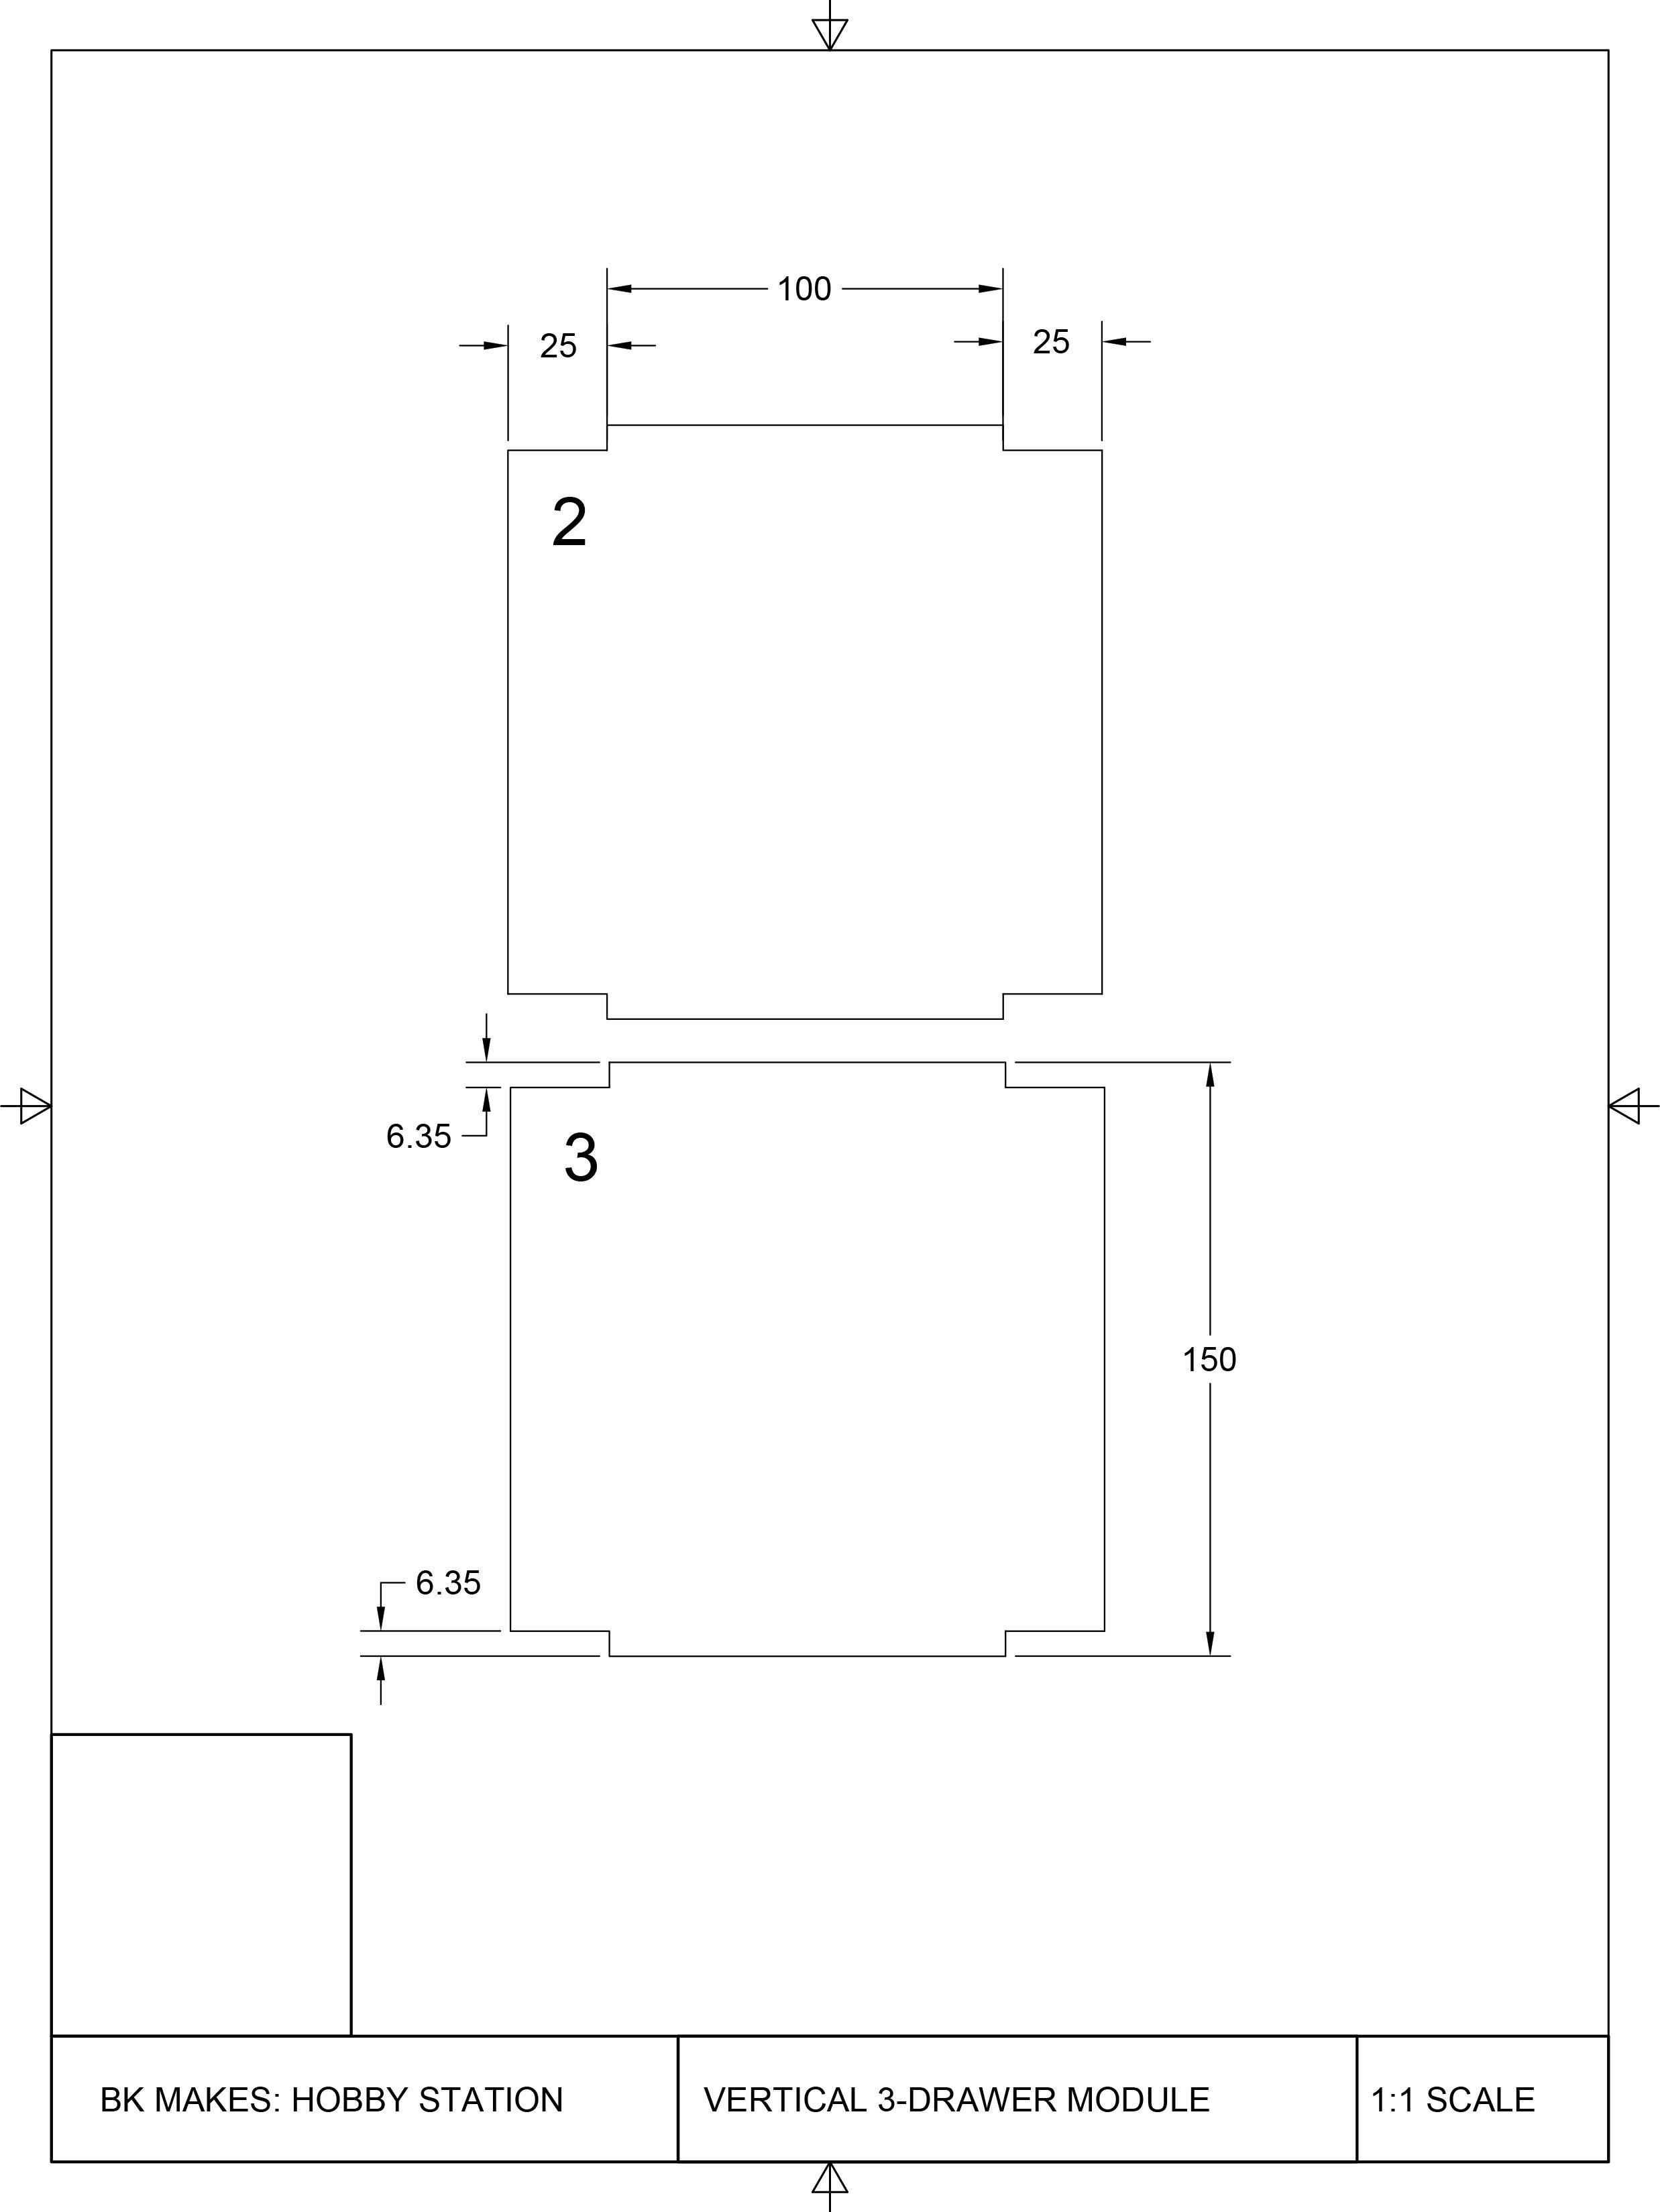 Vertical 3-Drawer Module Templates-3.jpg